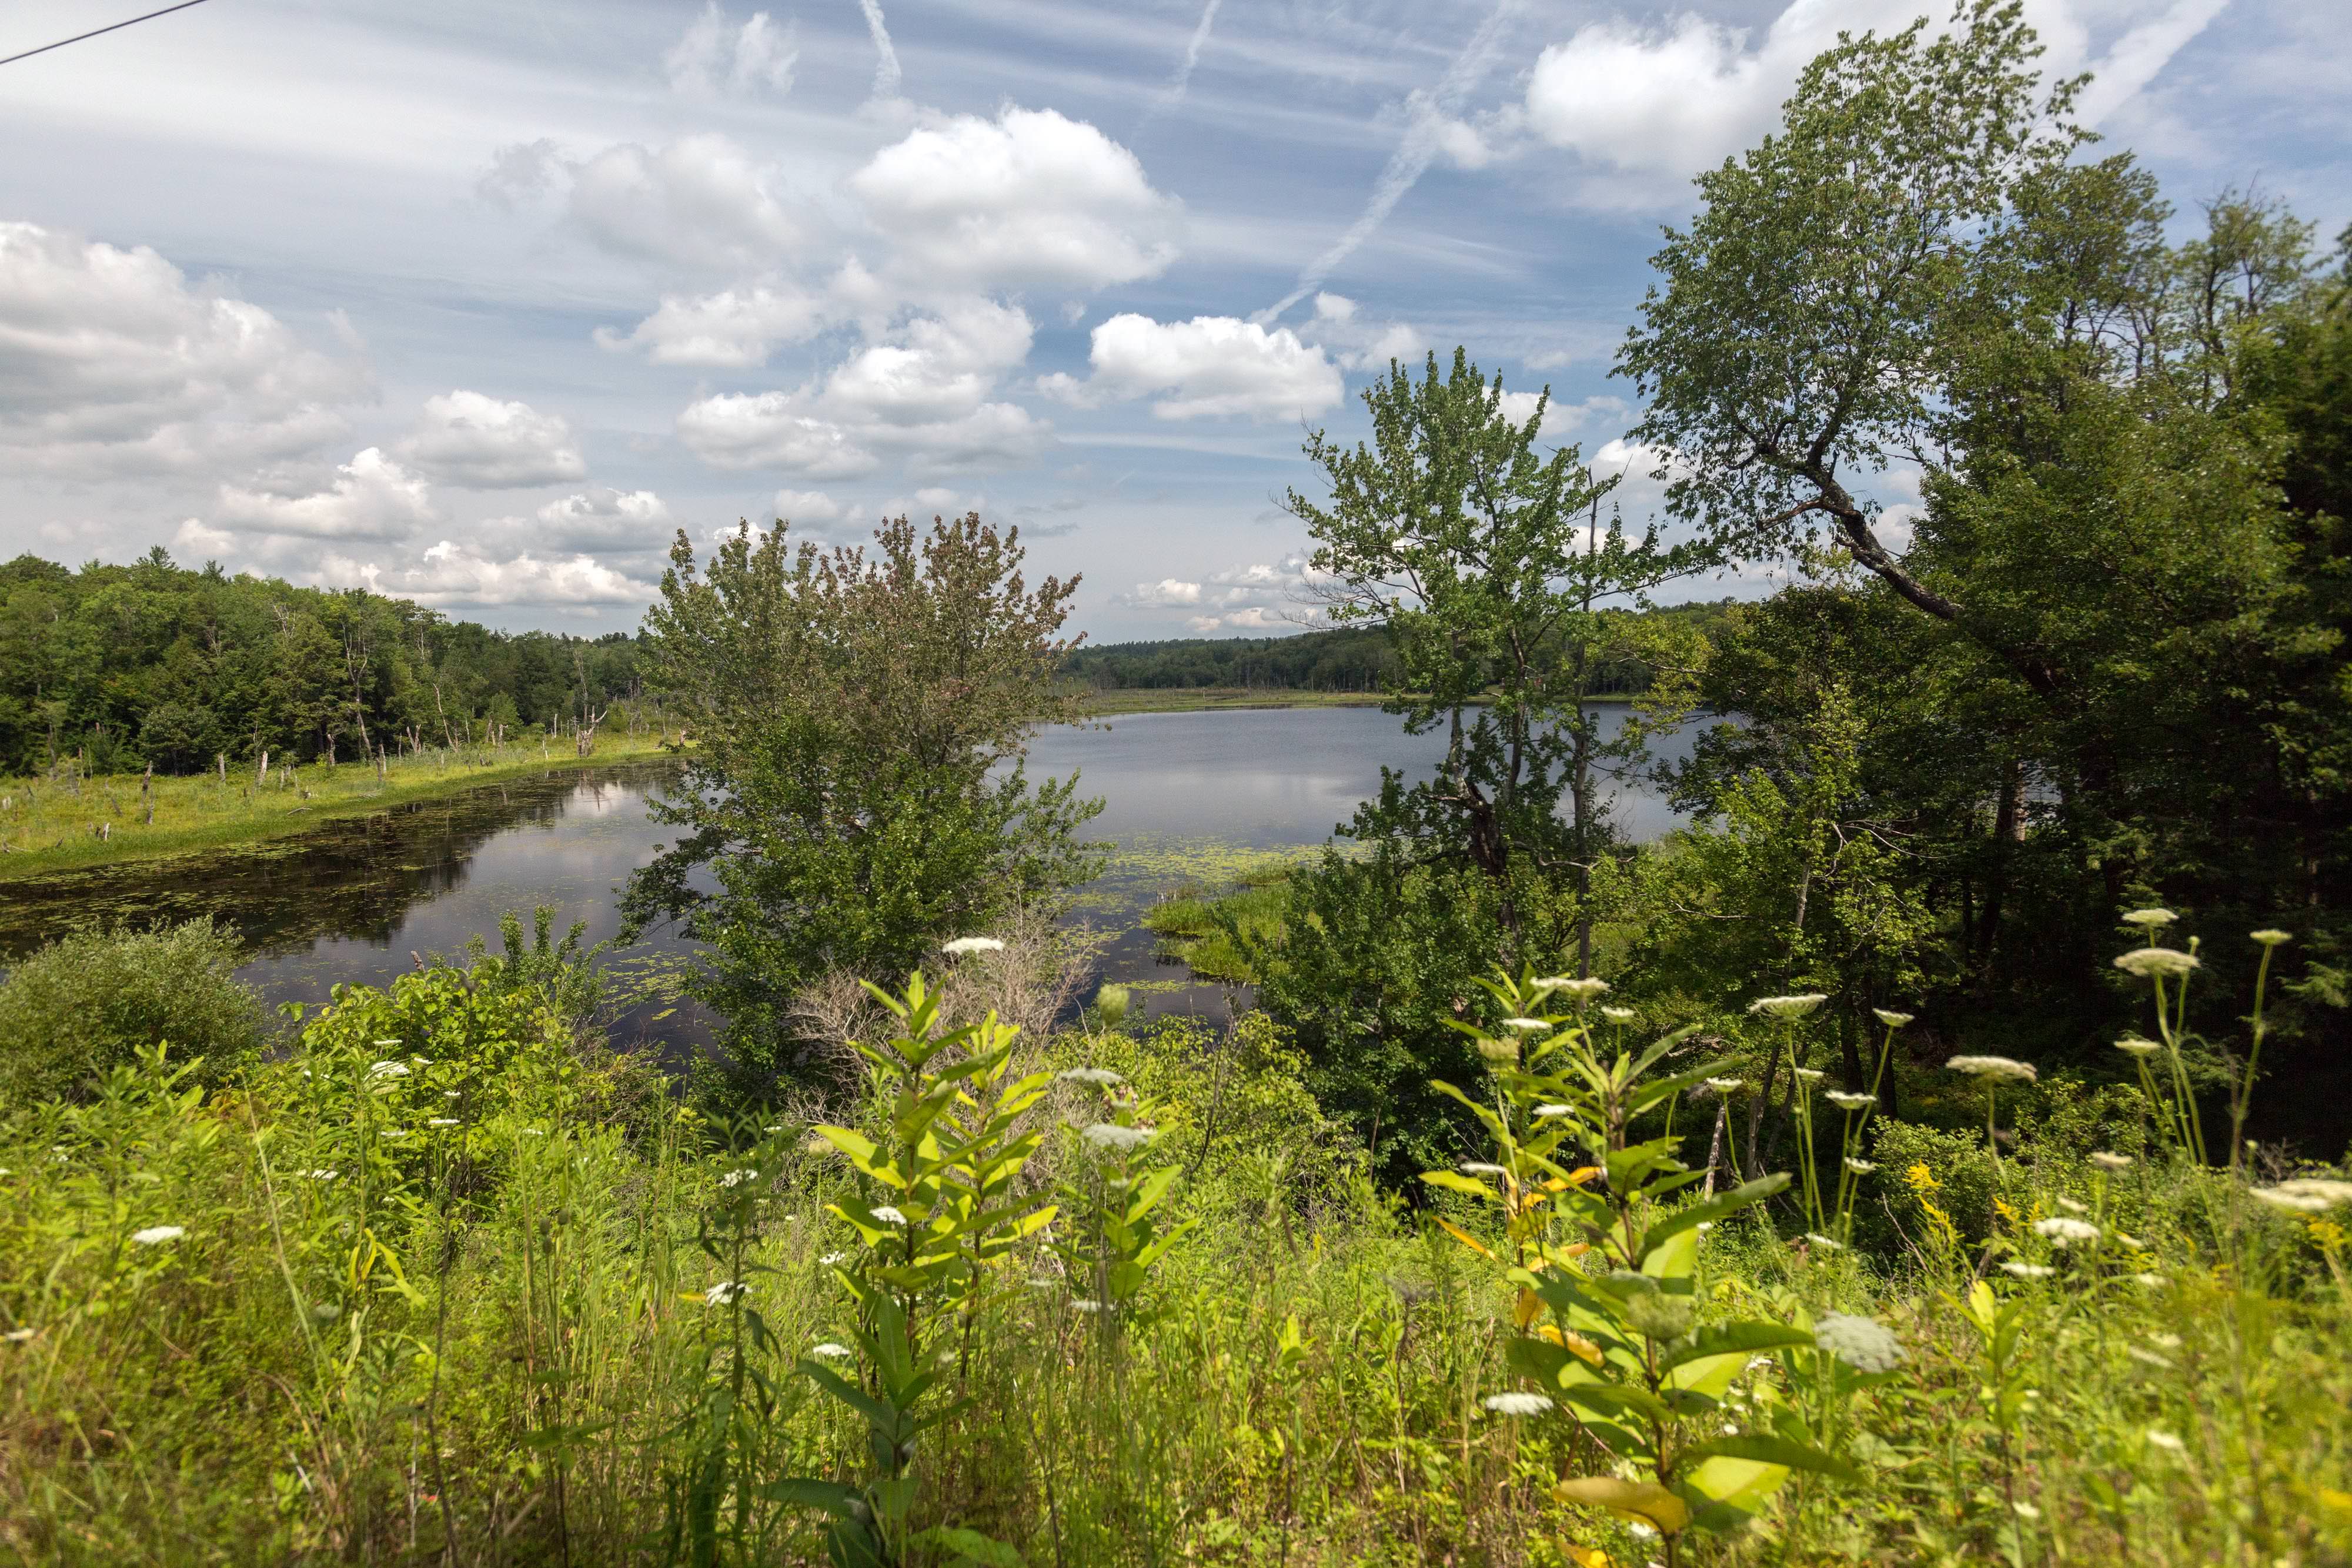 Pond and ground vegetation in rural setting of Western Massachusetts.